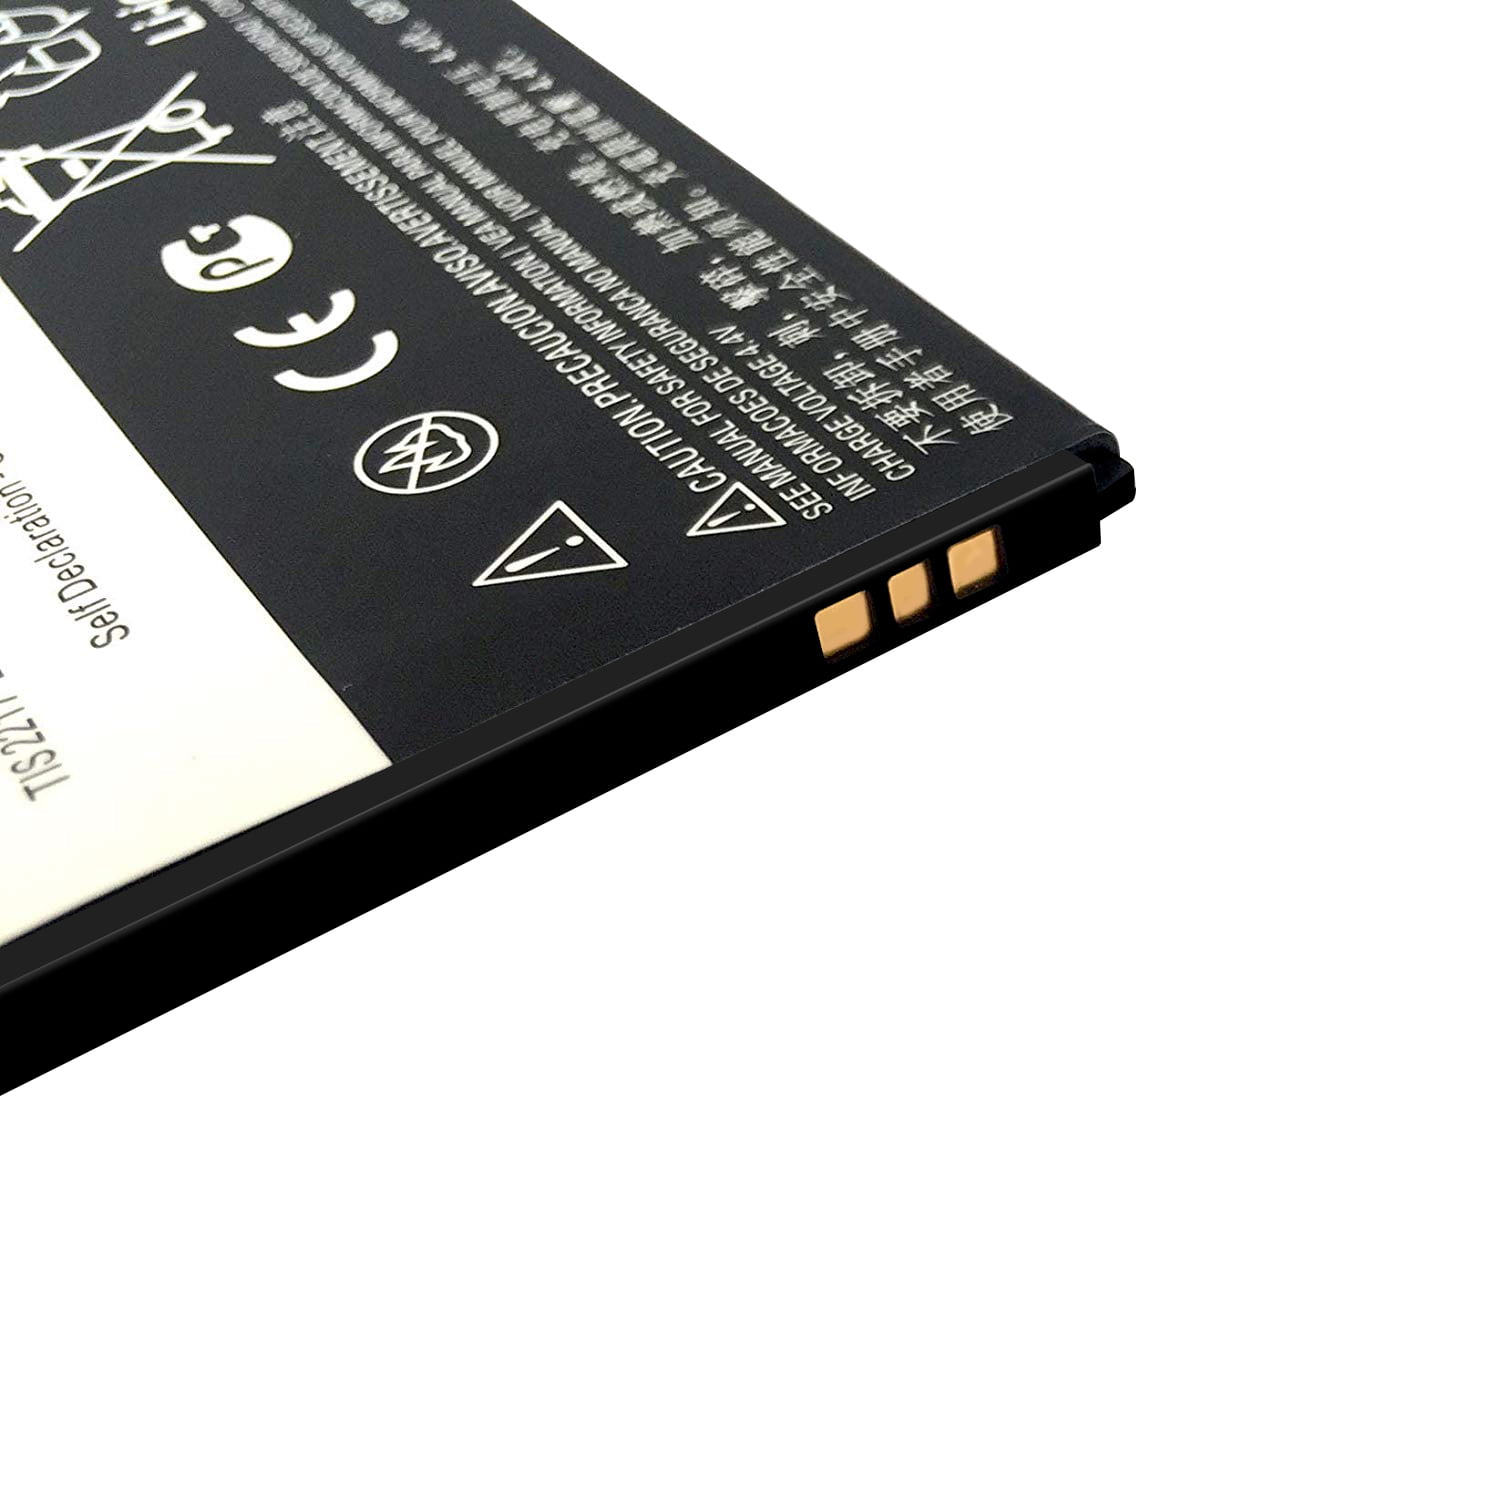  ASDAWN GK40 Battery Replacement for Motorola, Moto G4